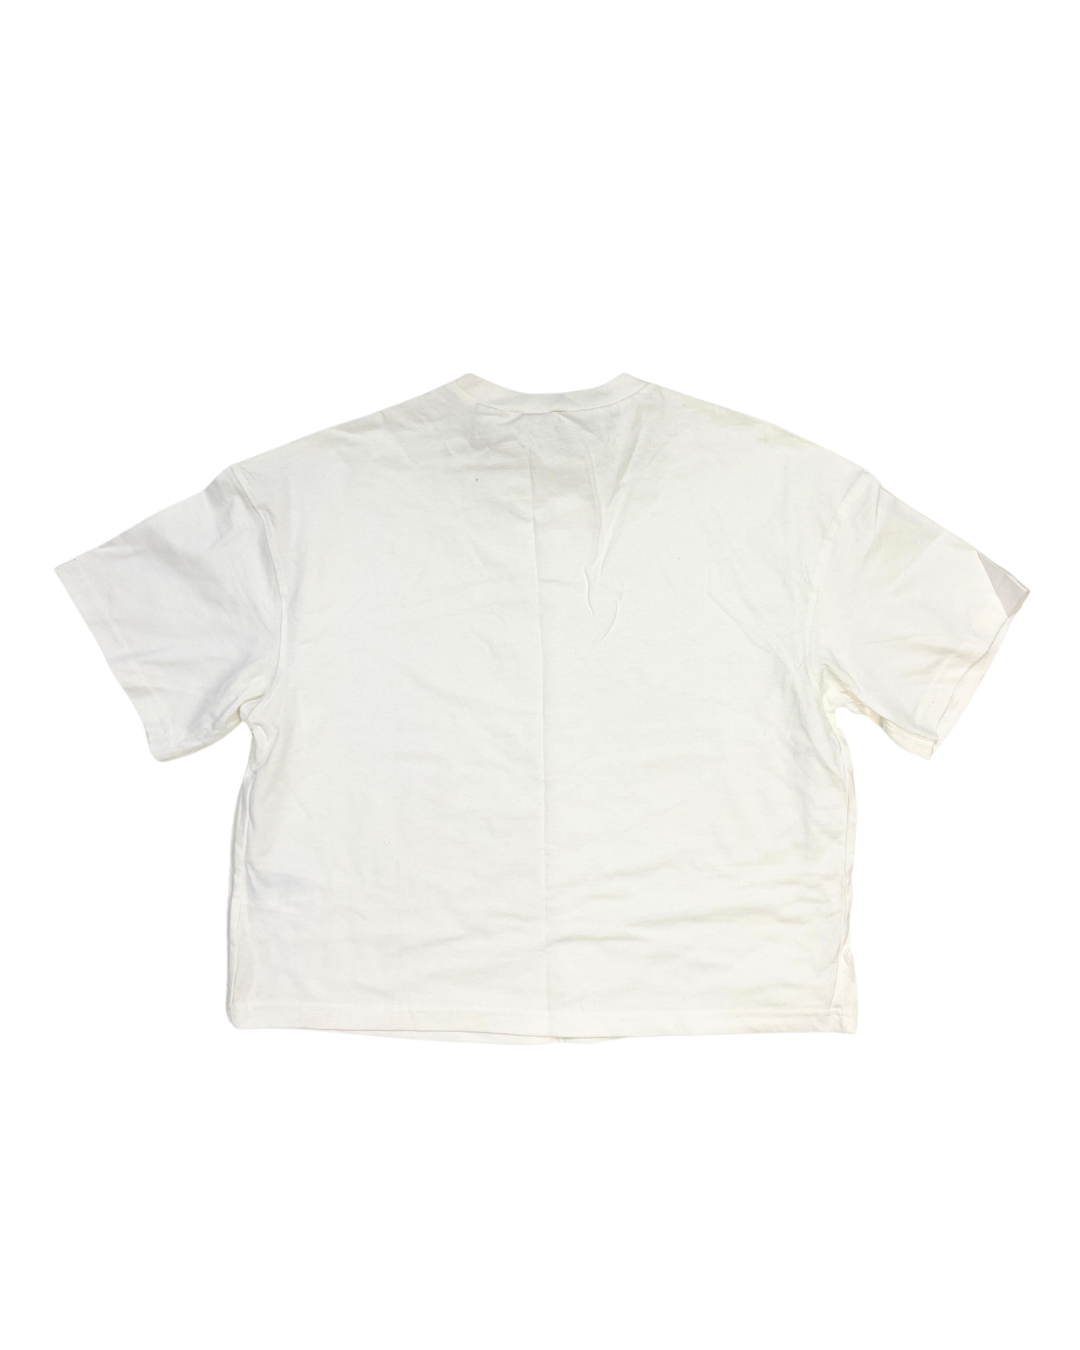 H&amp;M White T-Shirt